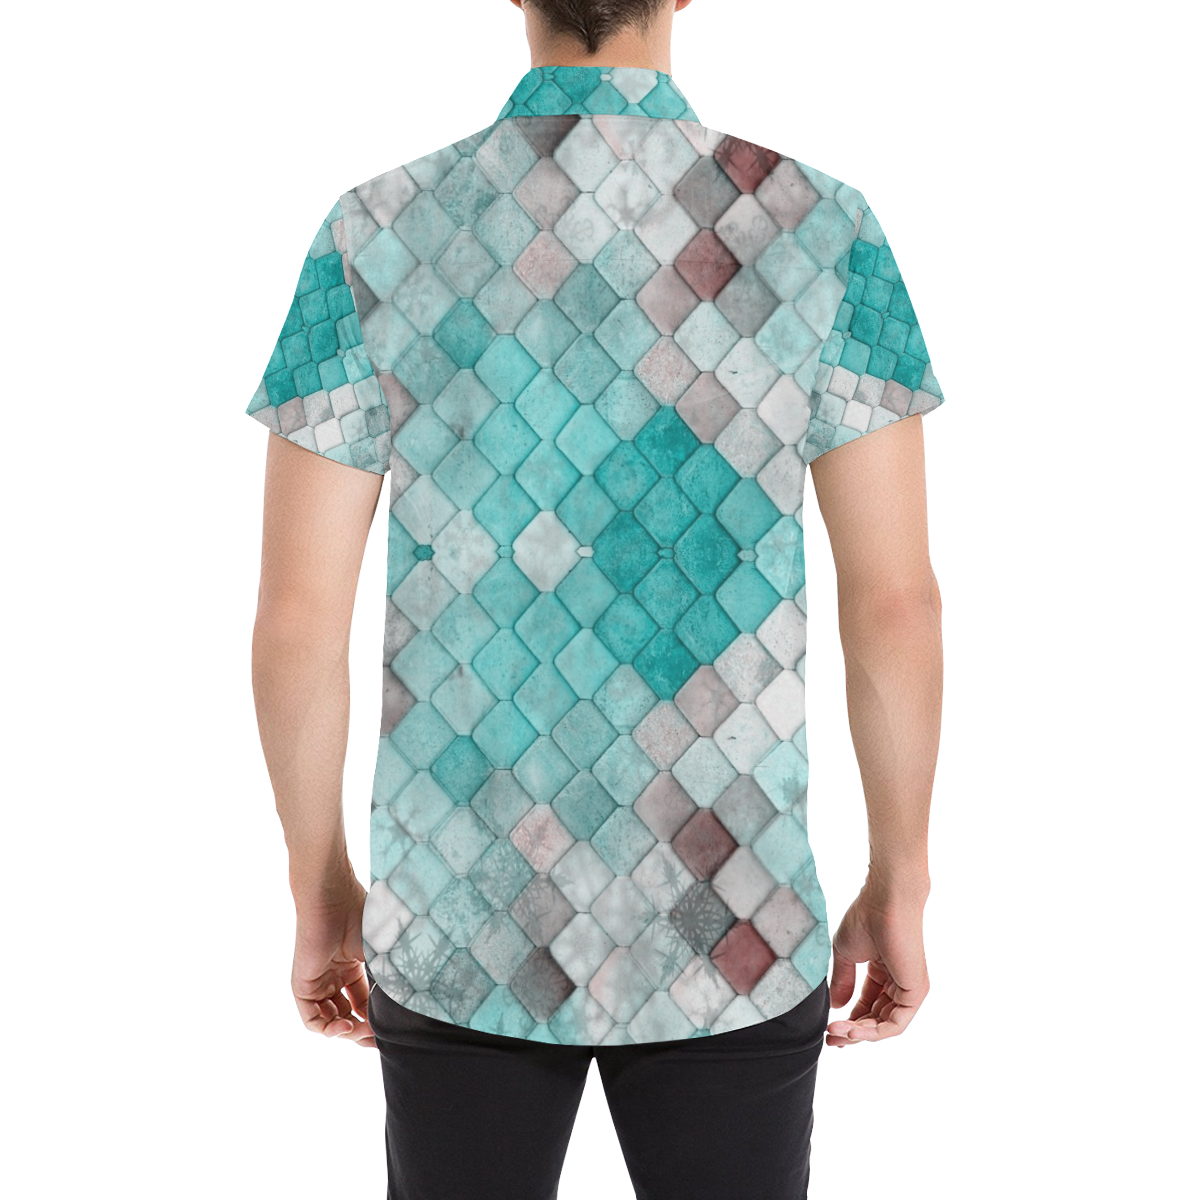 Big Pattern by K.Merske Men's All Over Print Short Sleeve Shirt (Model T53)